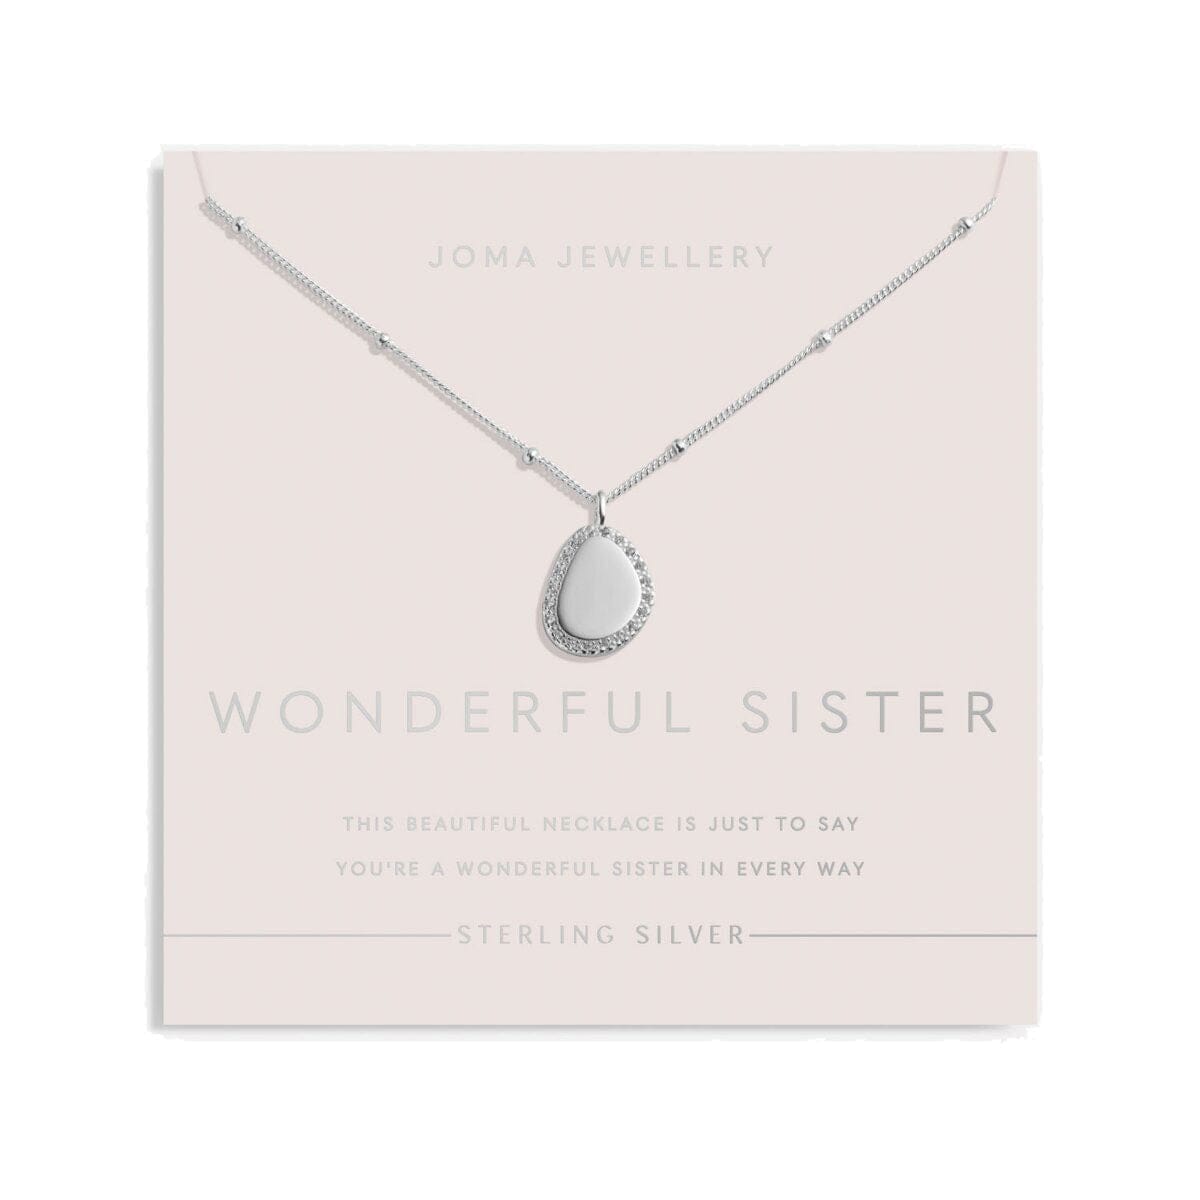 Joma Jewellery Necklace Joma Jewellery Sterling Silver Necklace - Wonderful Sister